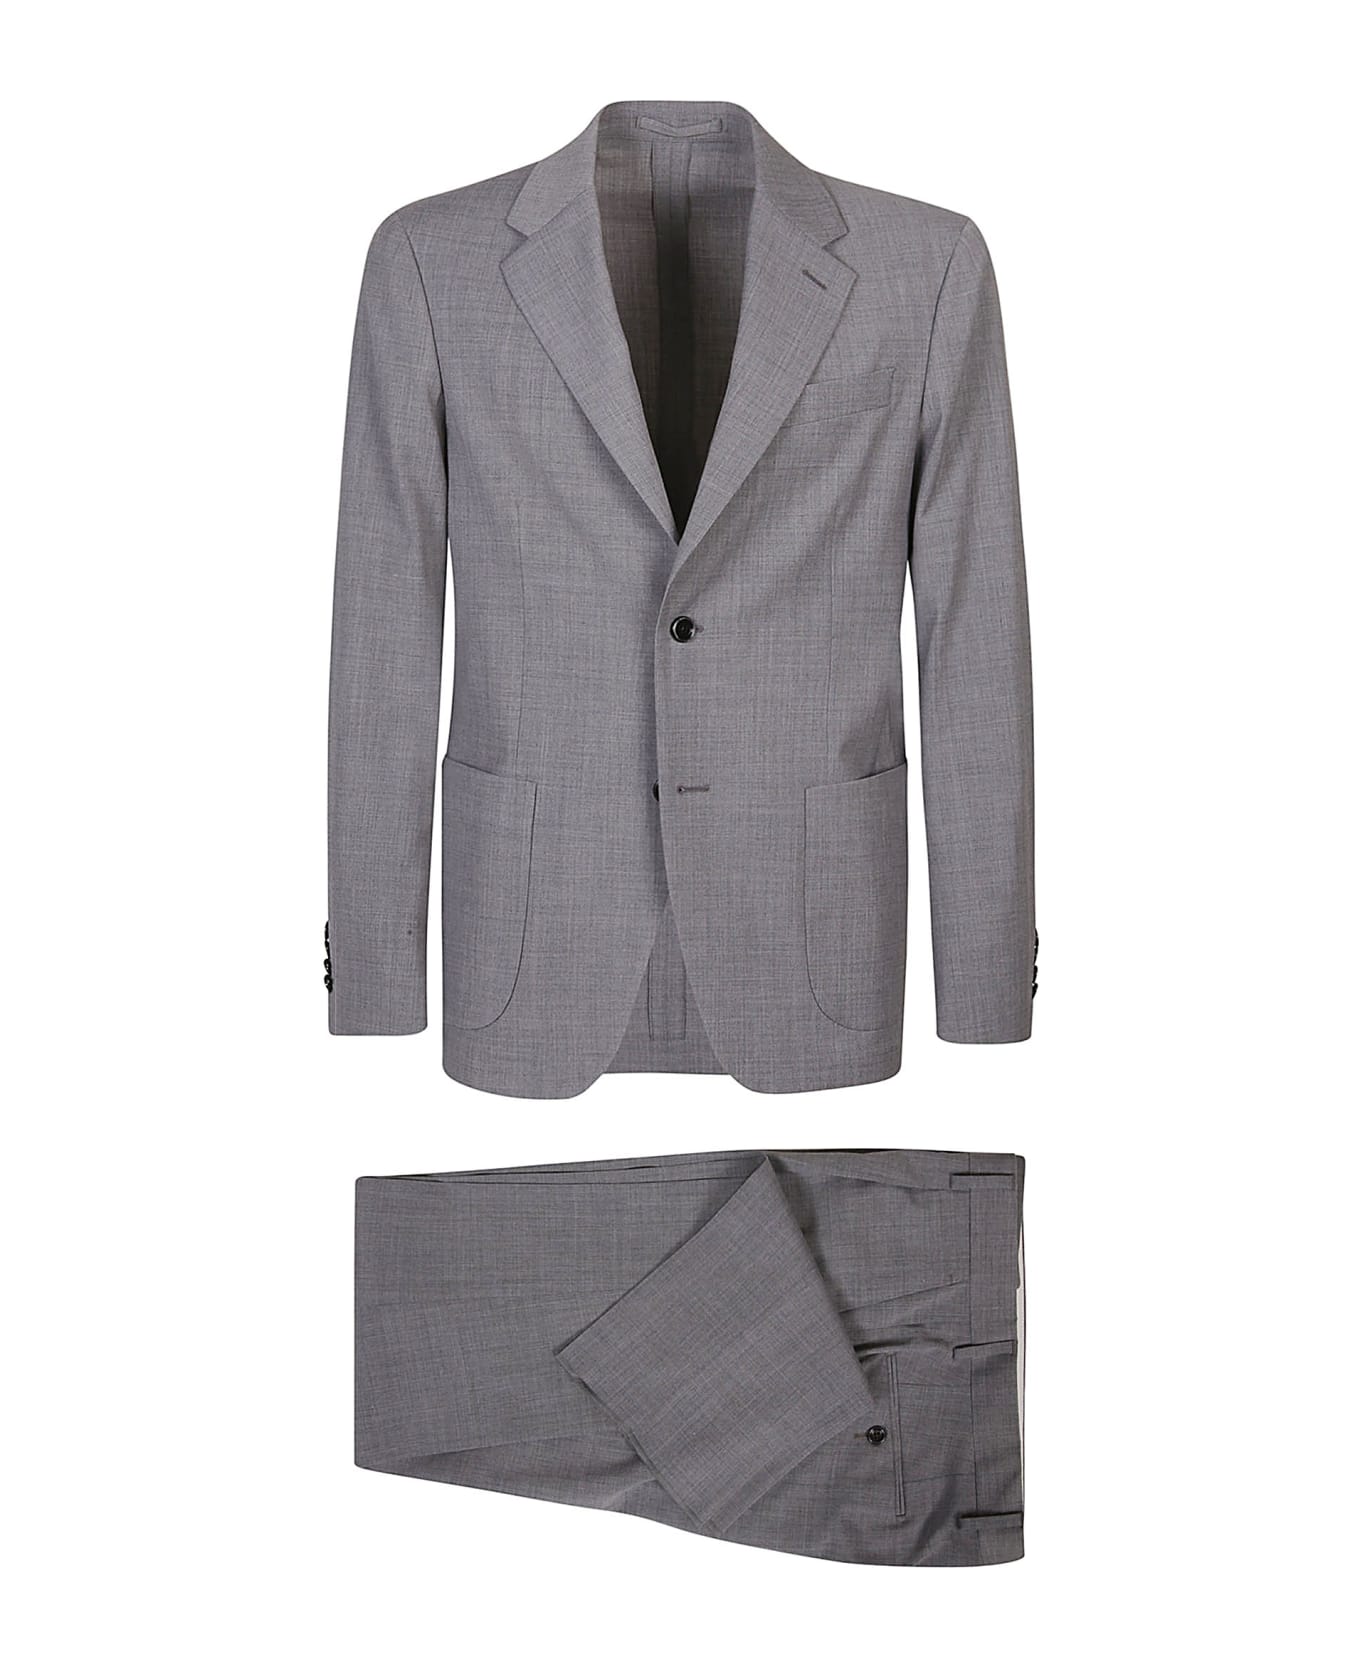 Lardini Easy Wear Suit - Grigio スーツ